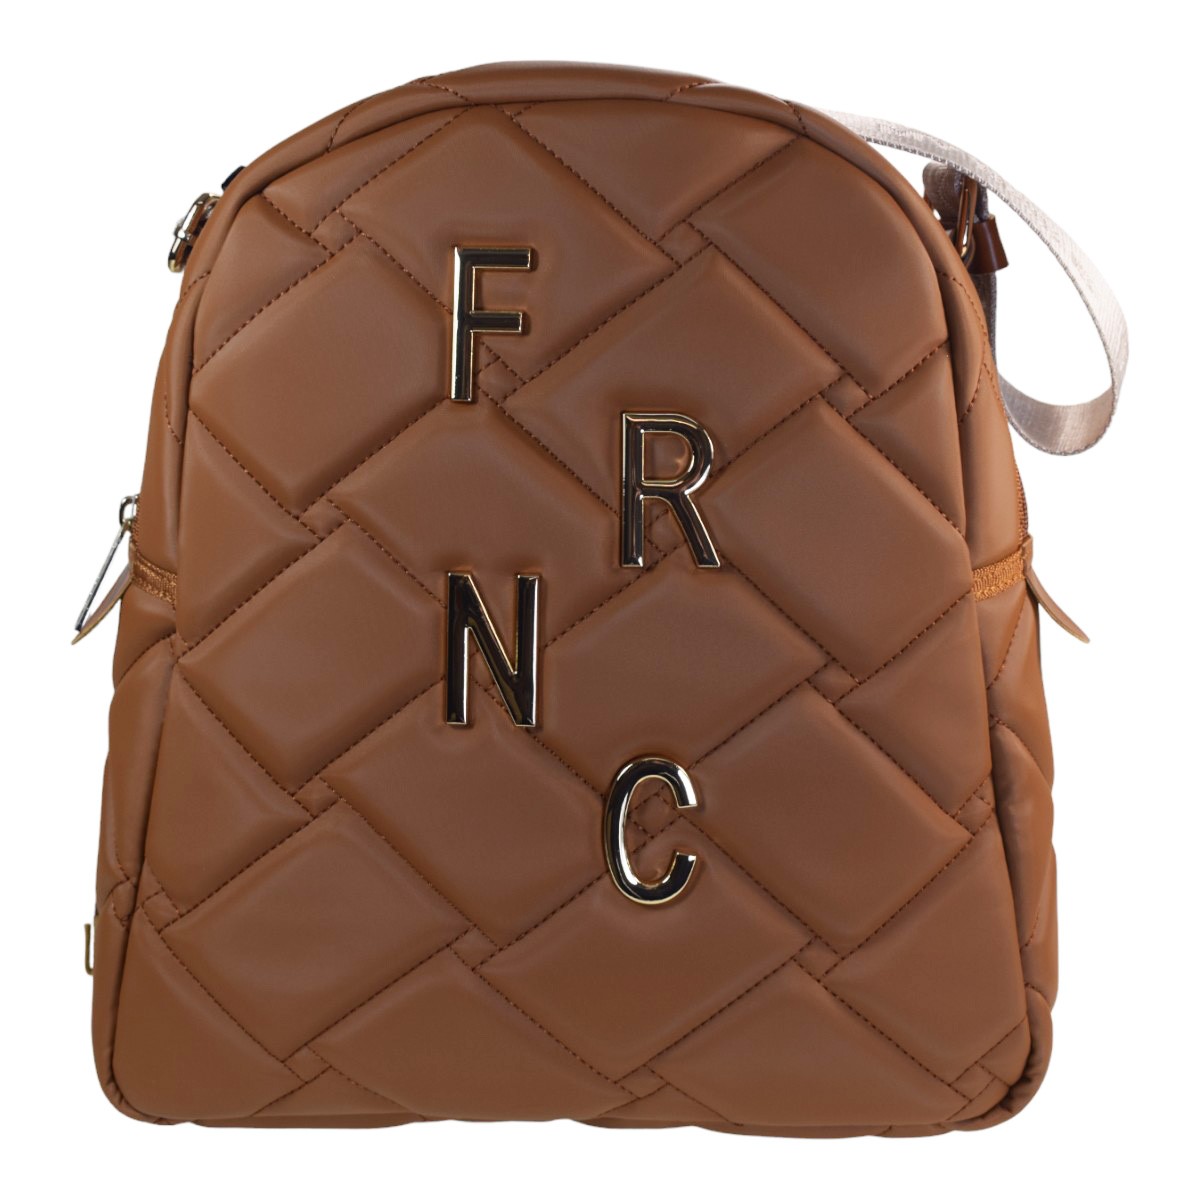 FRNC FRANCESCO Τσάντα Γυναικεία Πλάτης-Backpack Ώμου 4803 TB Ταμπά 4803 tb